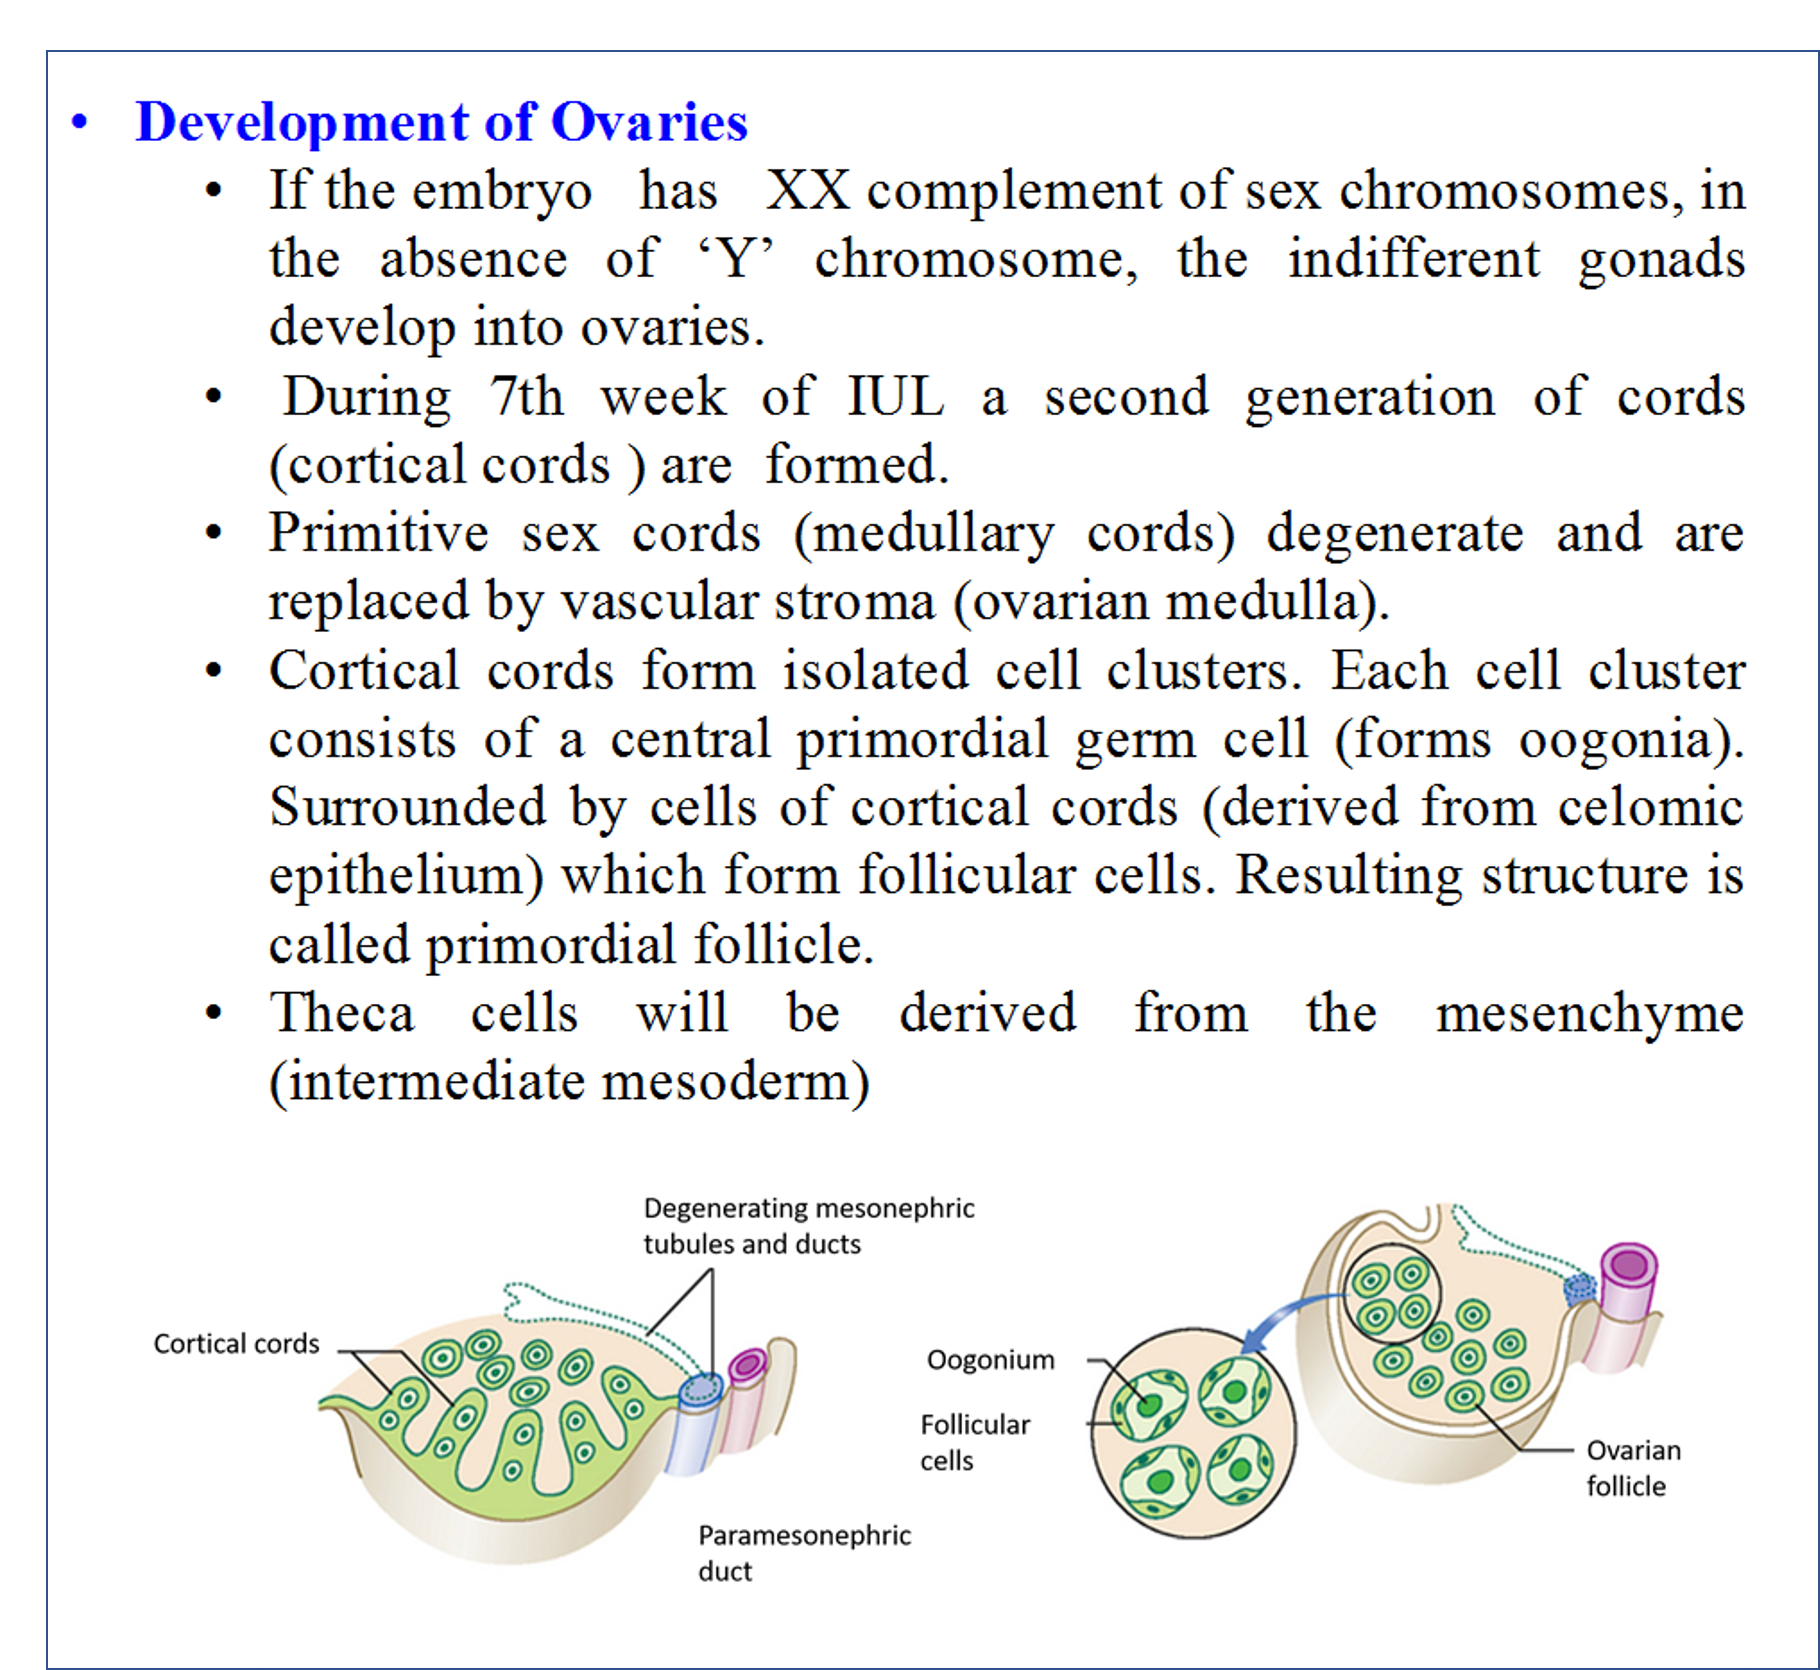 Development of Ovaries